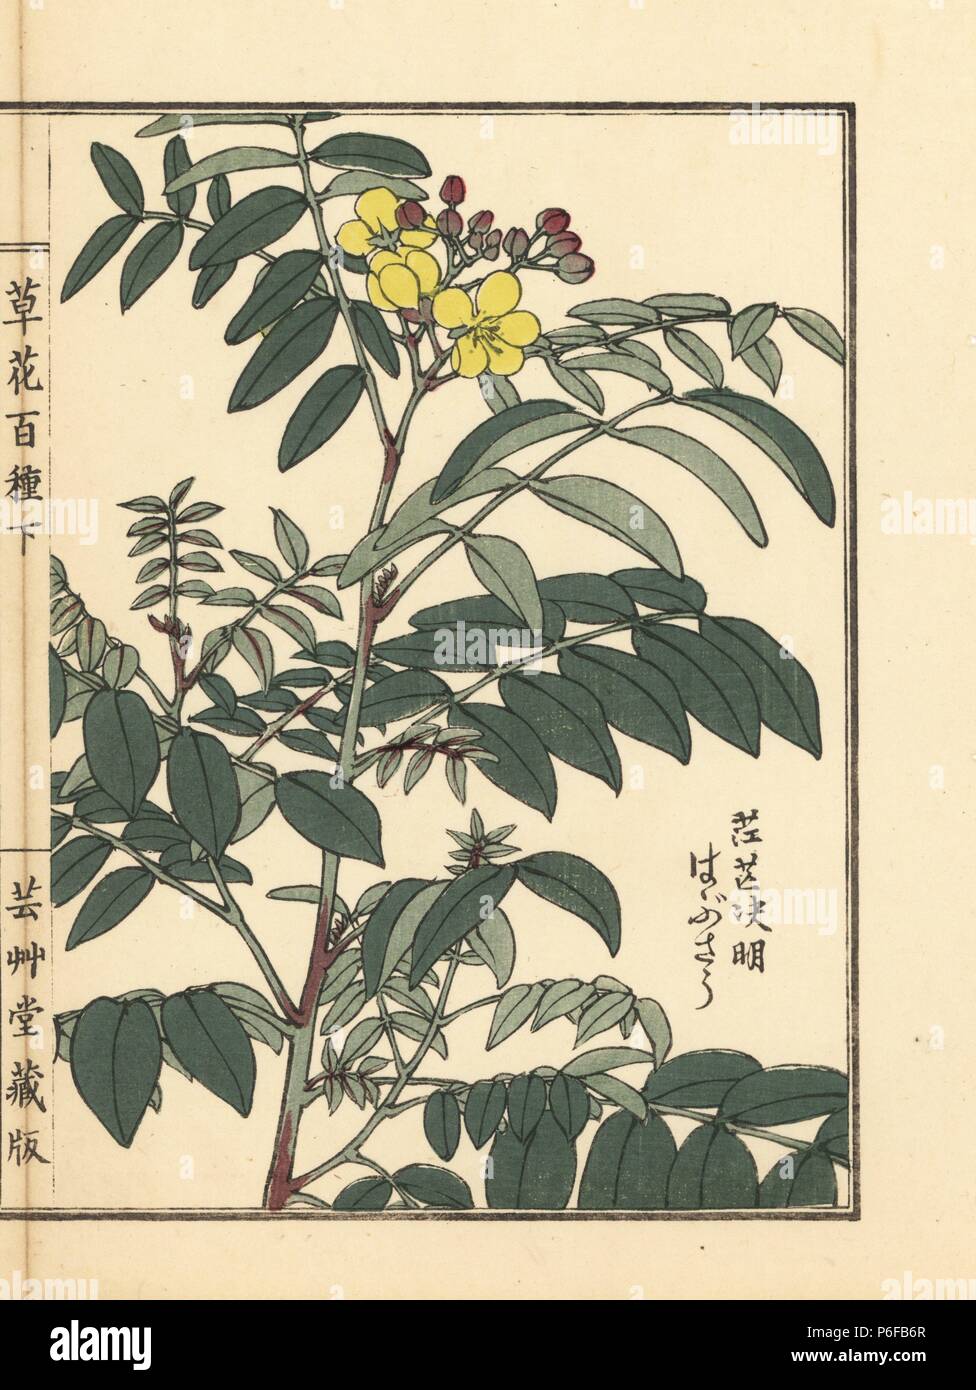 Habusou or coffee senna, Senna occidentalis. Handcoloured woodblock print by Kono Bairei from Kusa Bana Hyakushu (One Hundred Varieties of Flowers), Tokyo, Yamada, 1901. Stock Photo